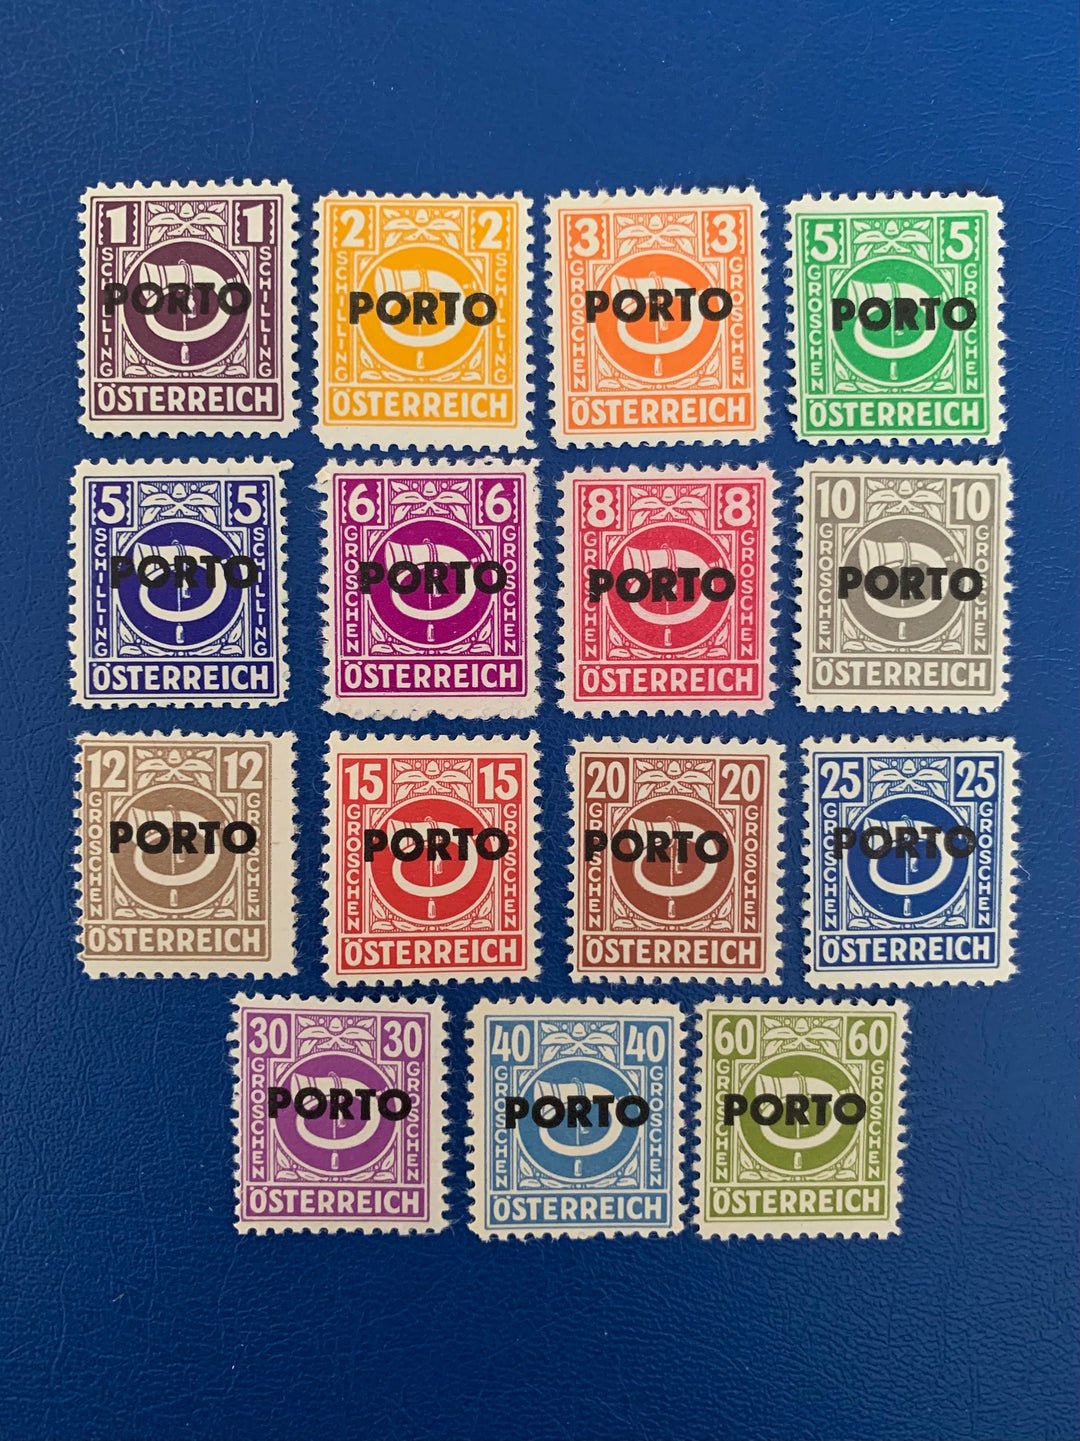 Austria - Original Vintage Postage Stamps - 1946 - Postage Due (Overprint Porto) - for the collector, artist or crafter